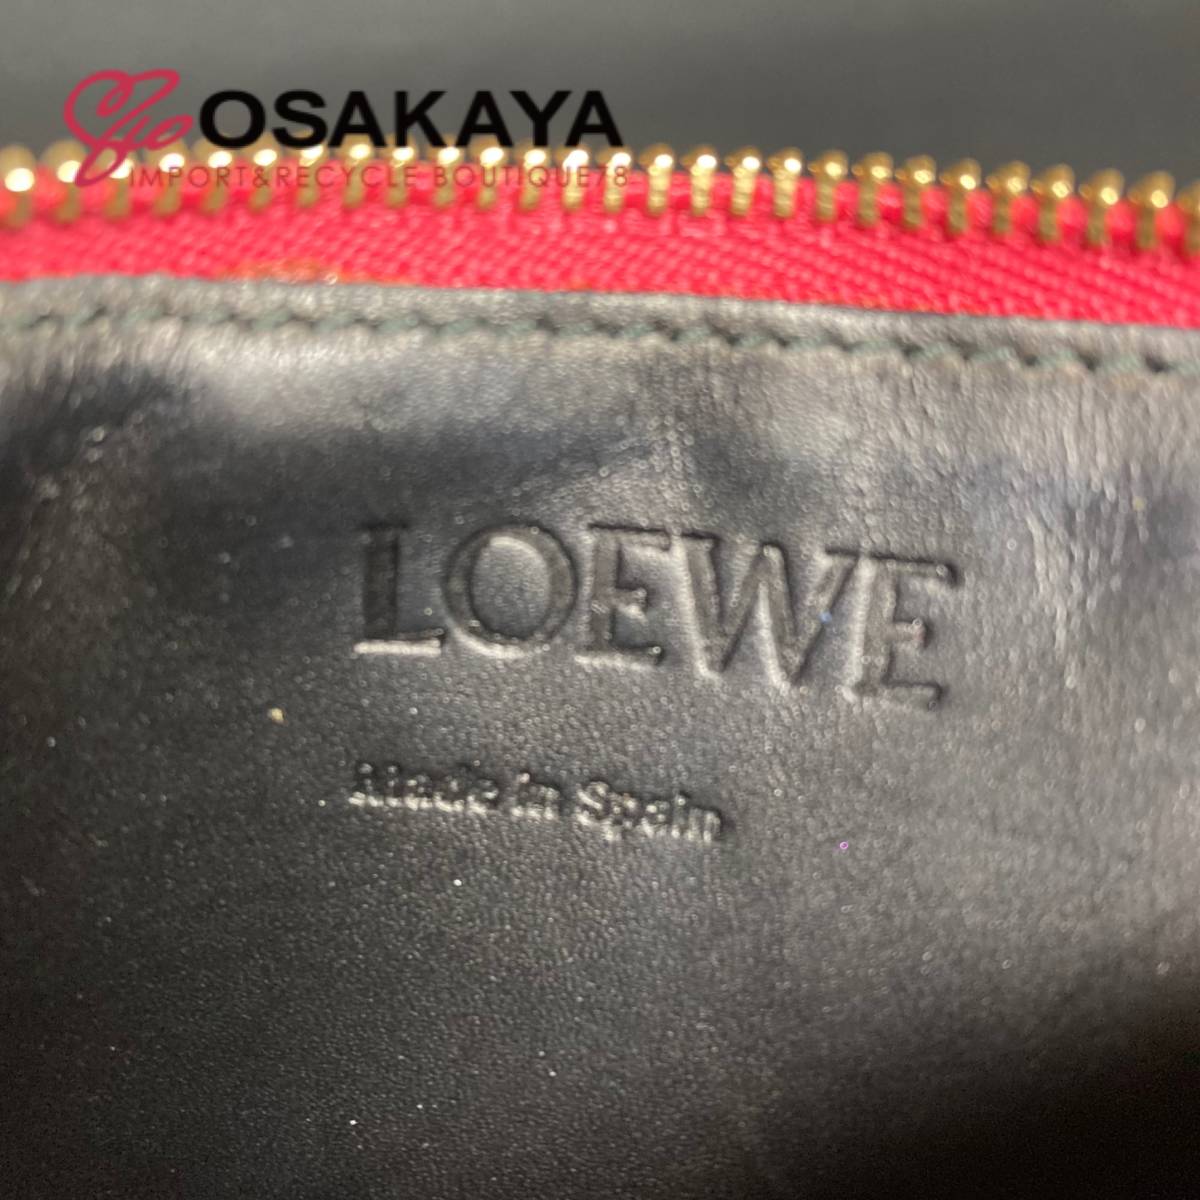  б/у LOEWE футляр для карточек ячейка для монет розовый кожа Loewe one отметка Испания застежка-молния compact сумка бардачок 